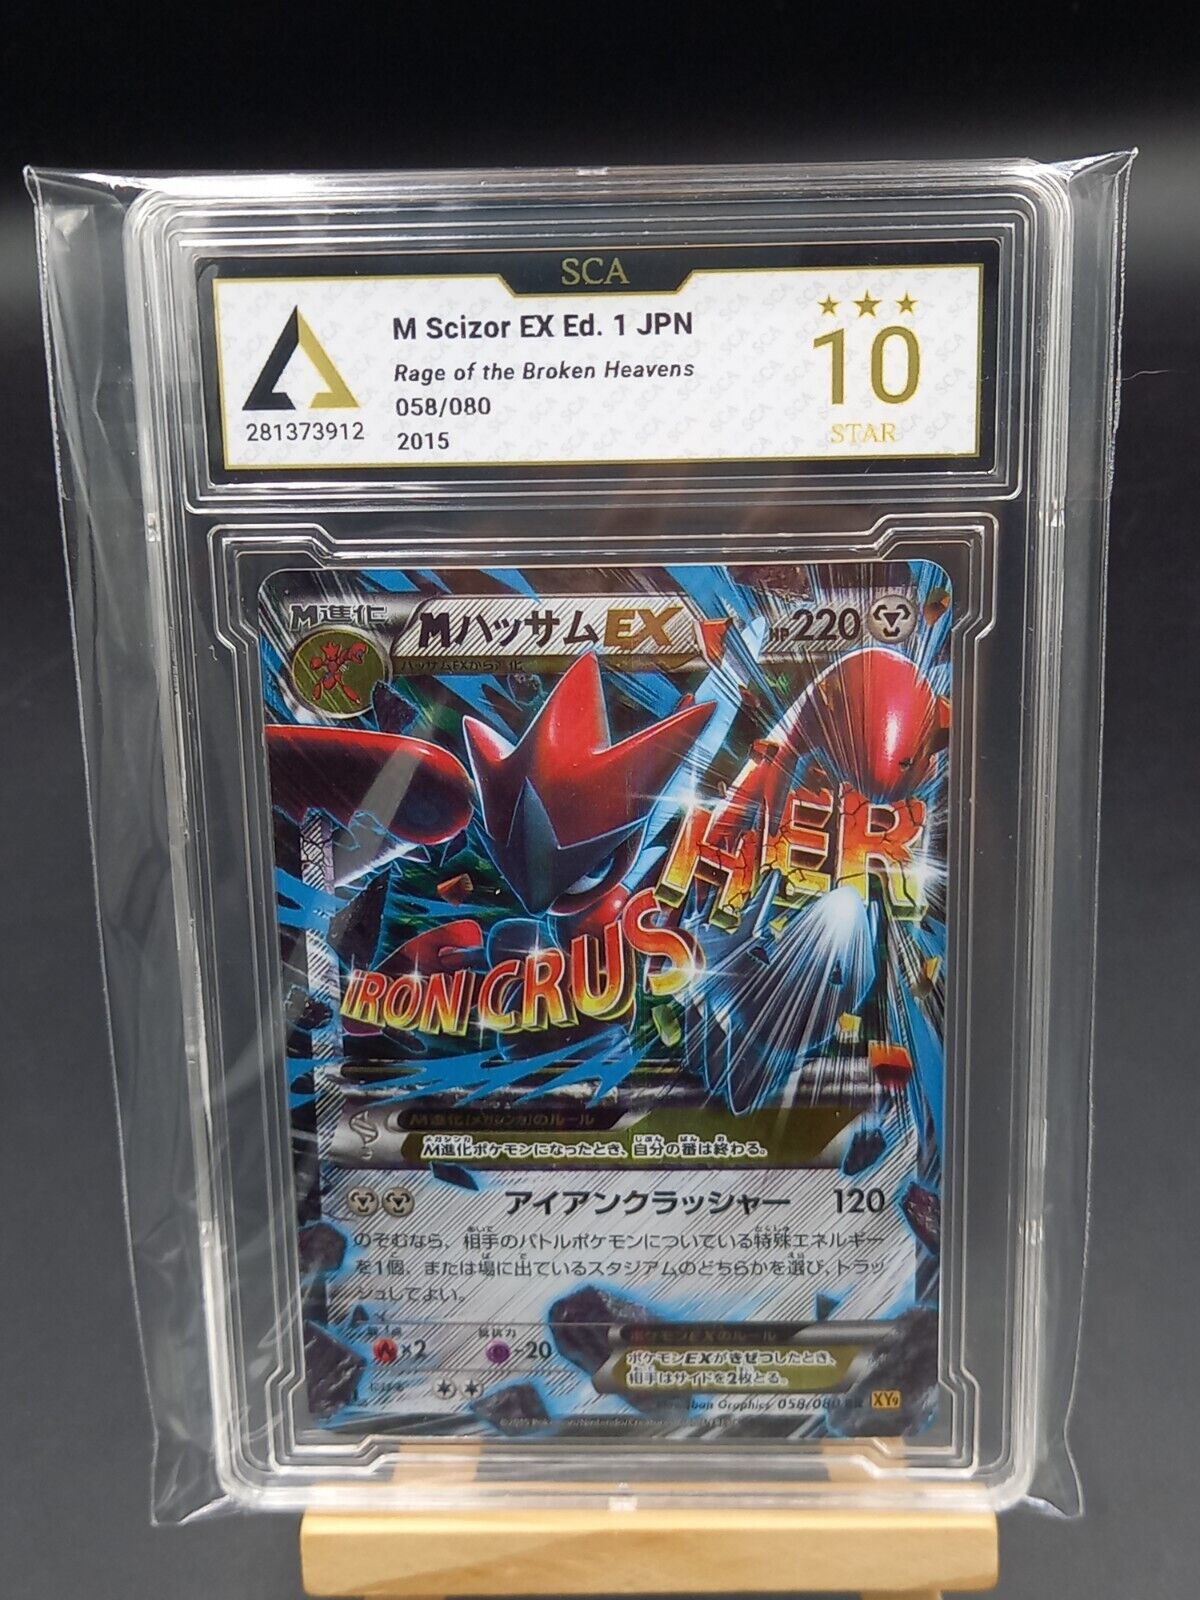 JAPANESE POKEMON CARD XY9 BREAKPOINT - M SCIZOR EX 058/080 1ST RR - NM/M SCA 10+